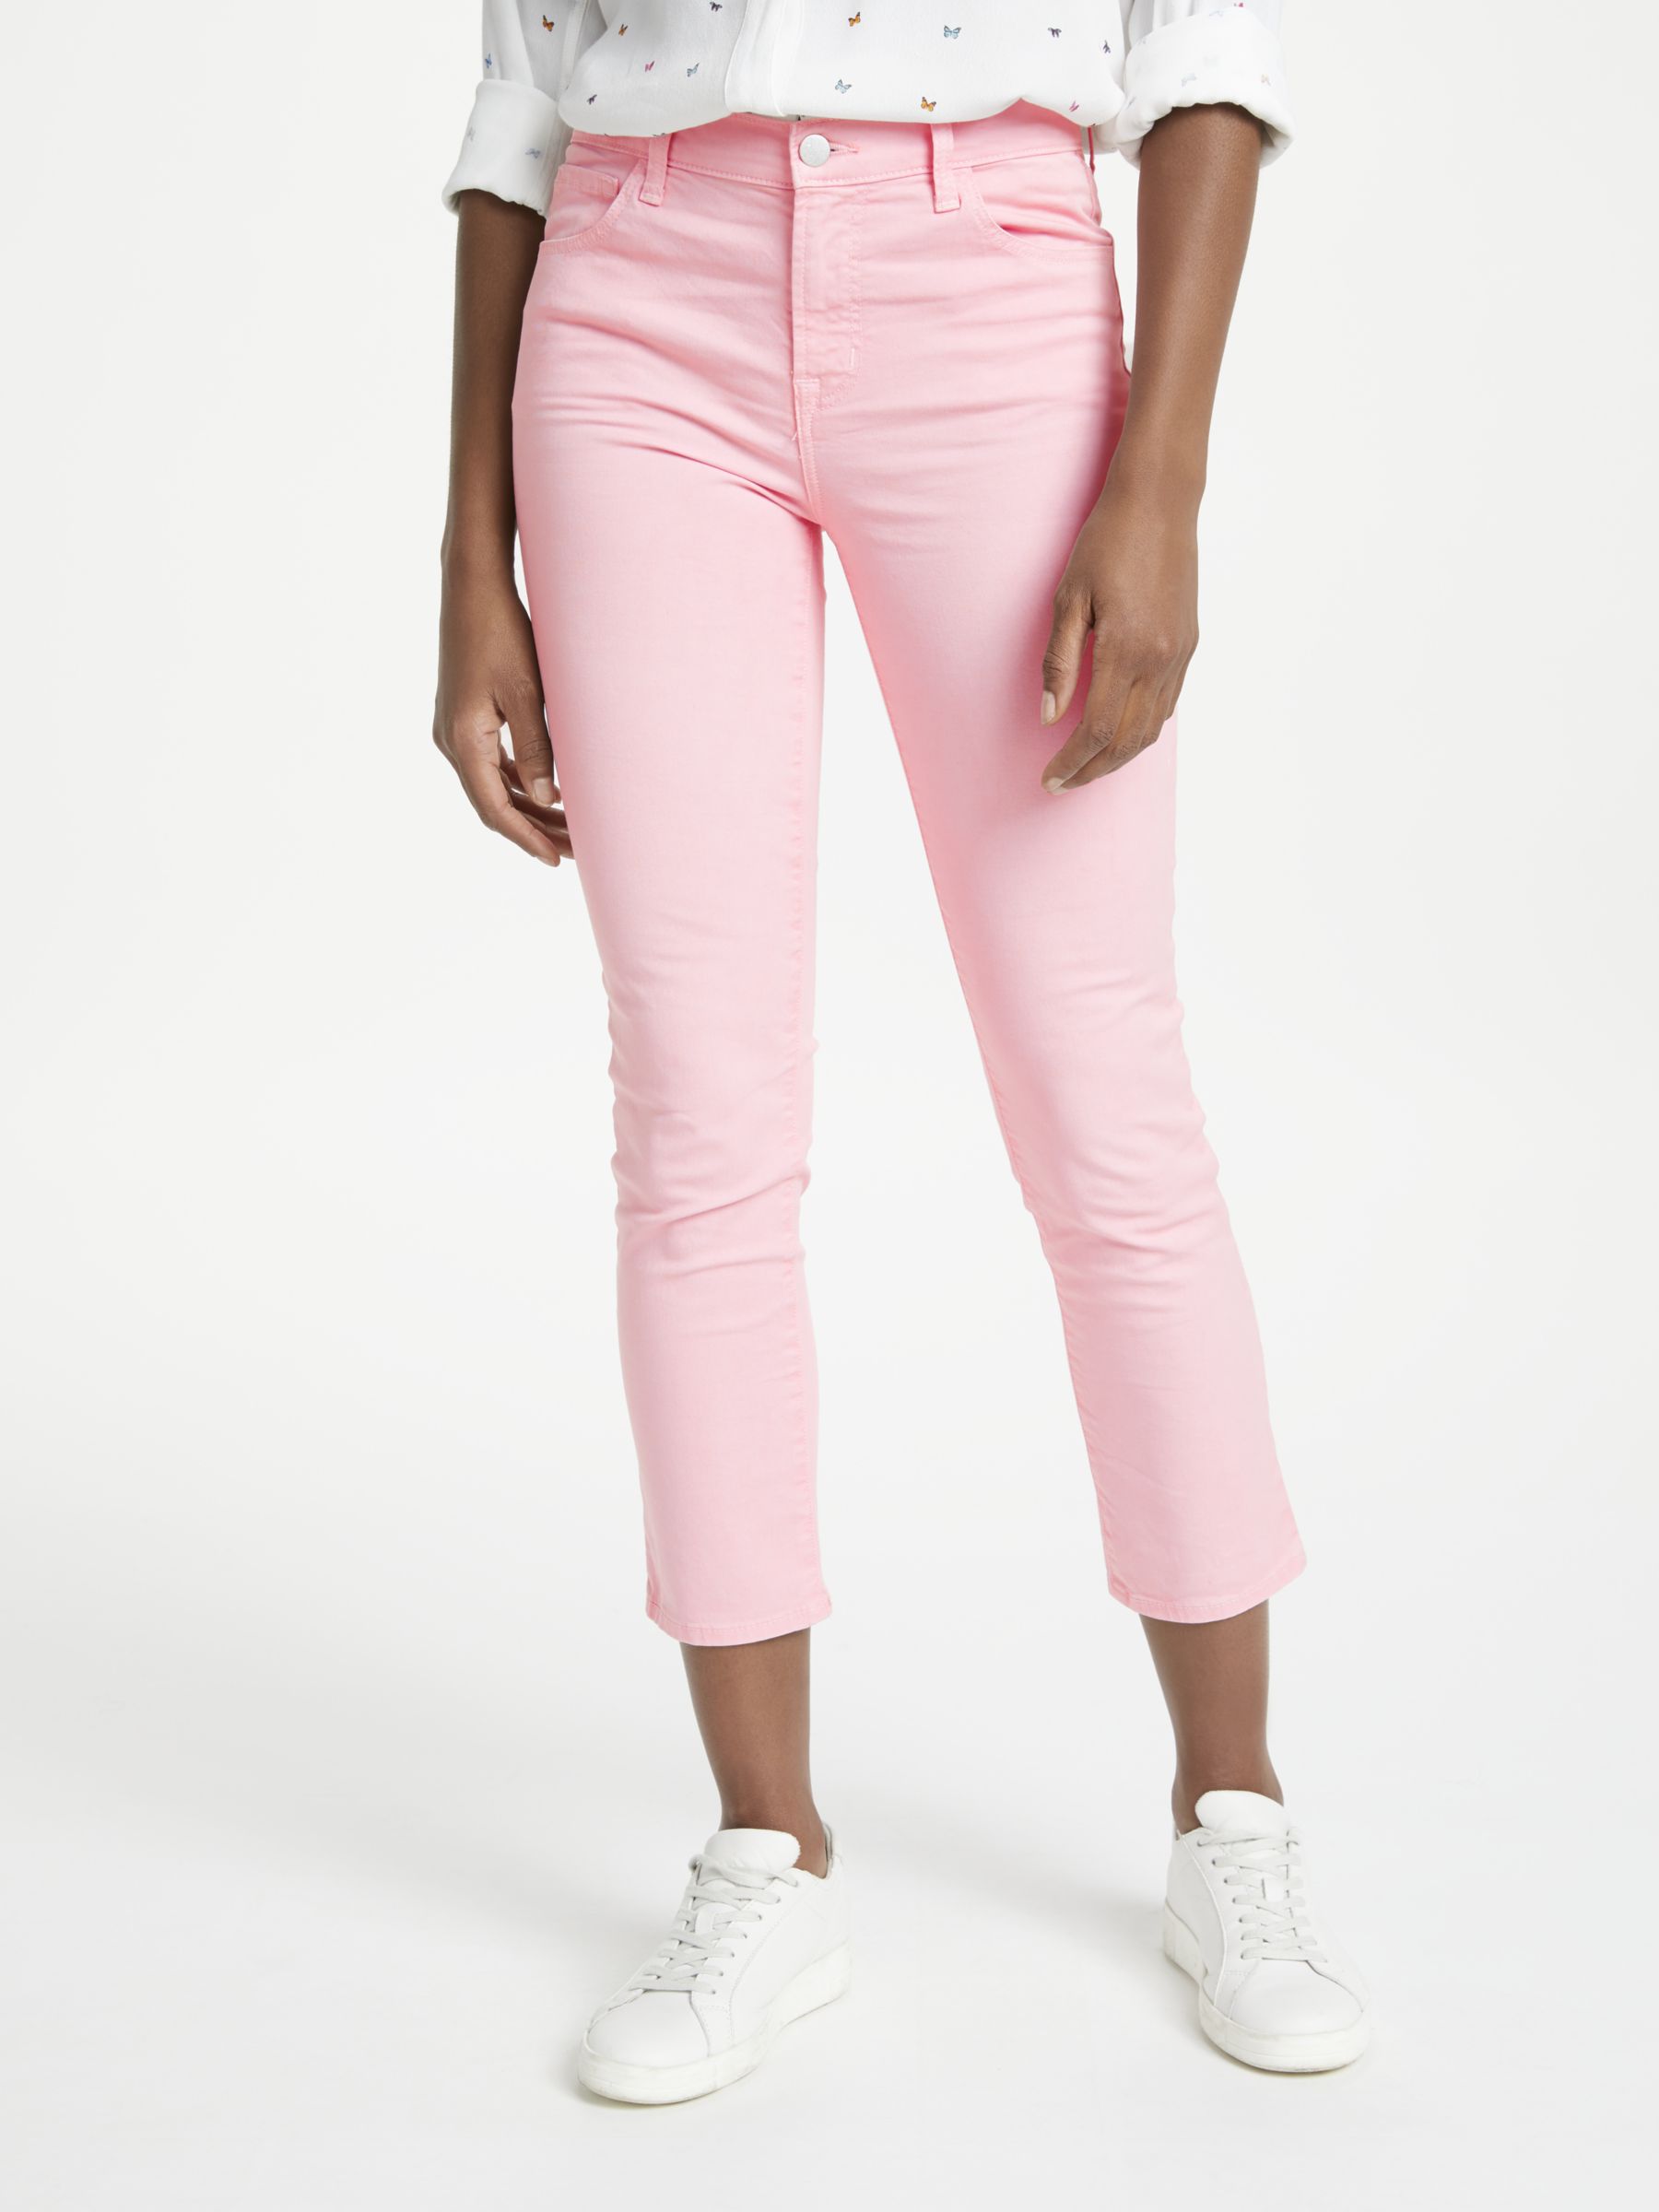 j brand pink jeans